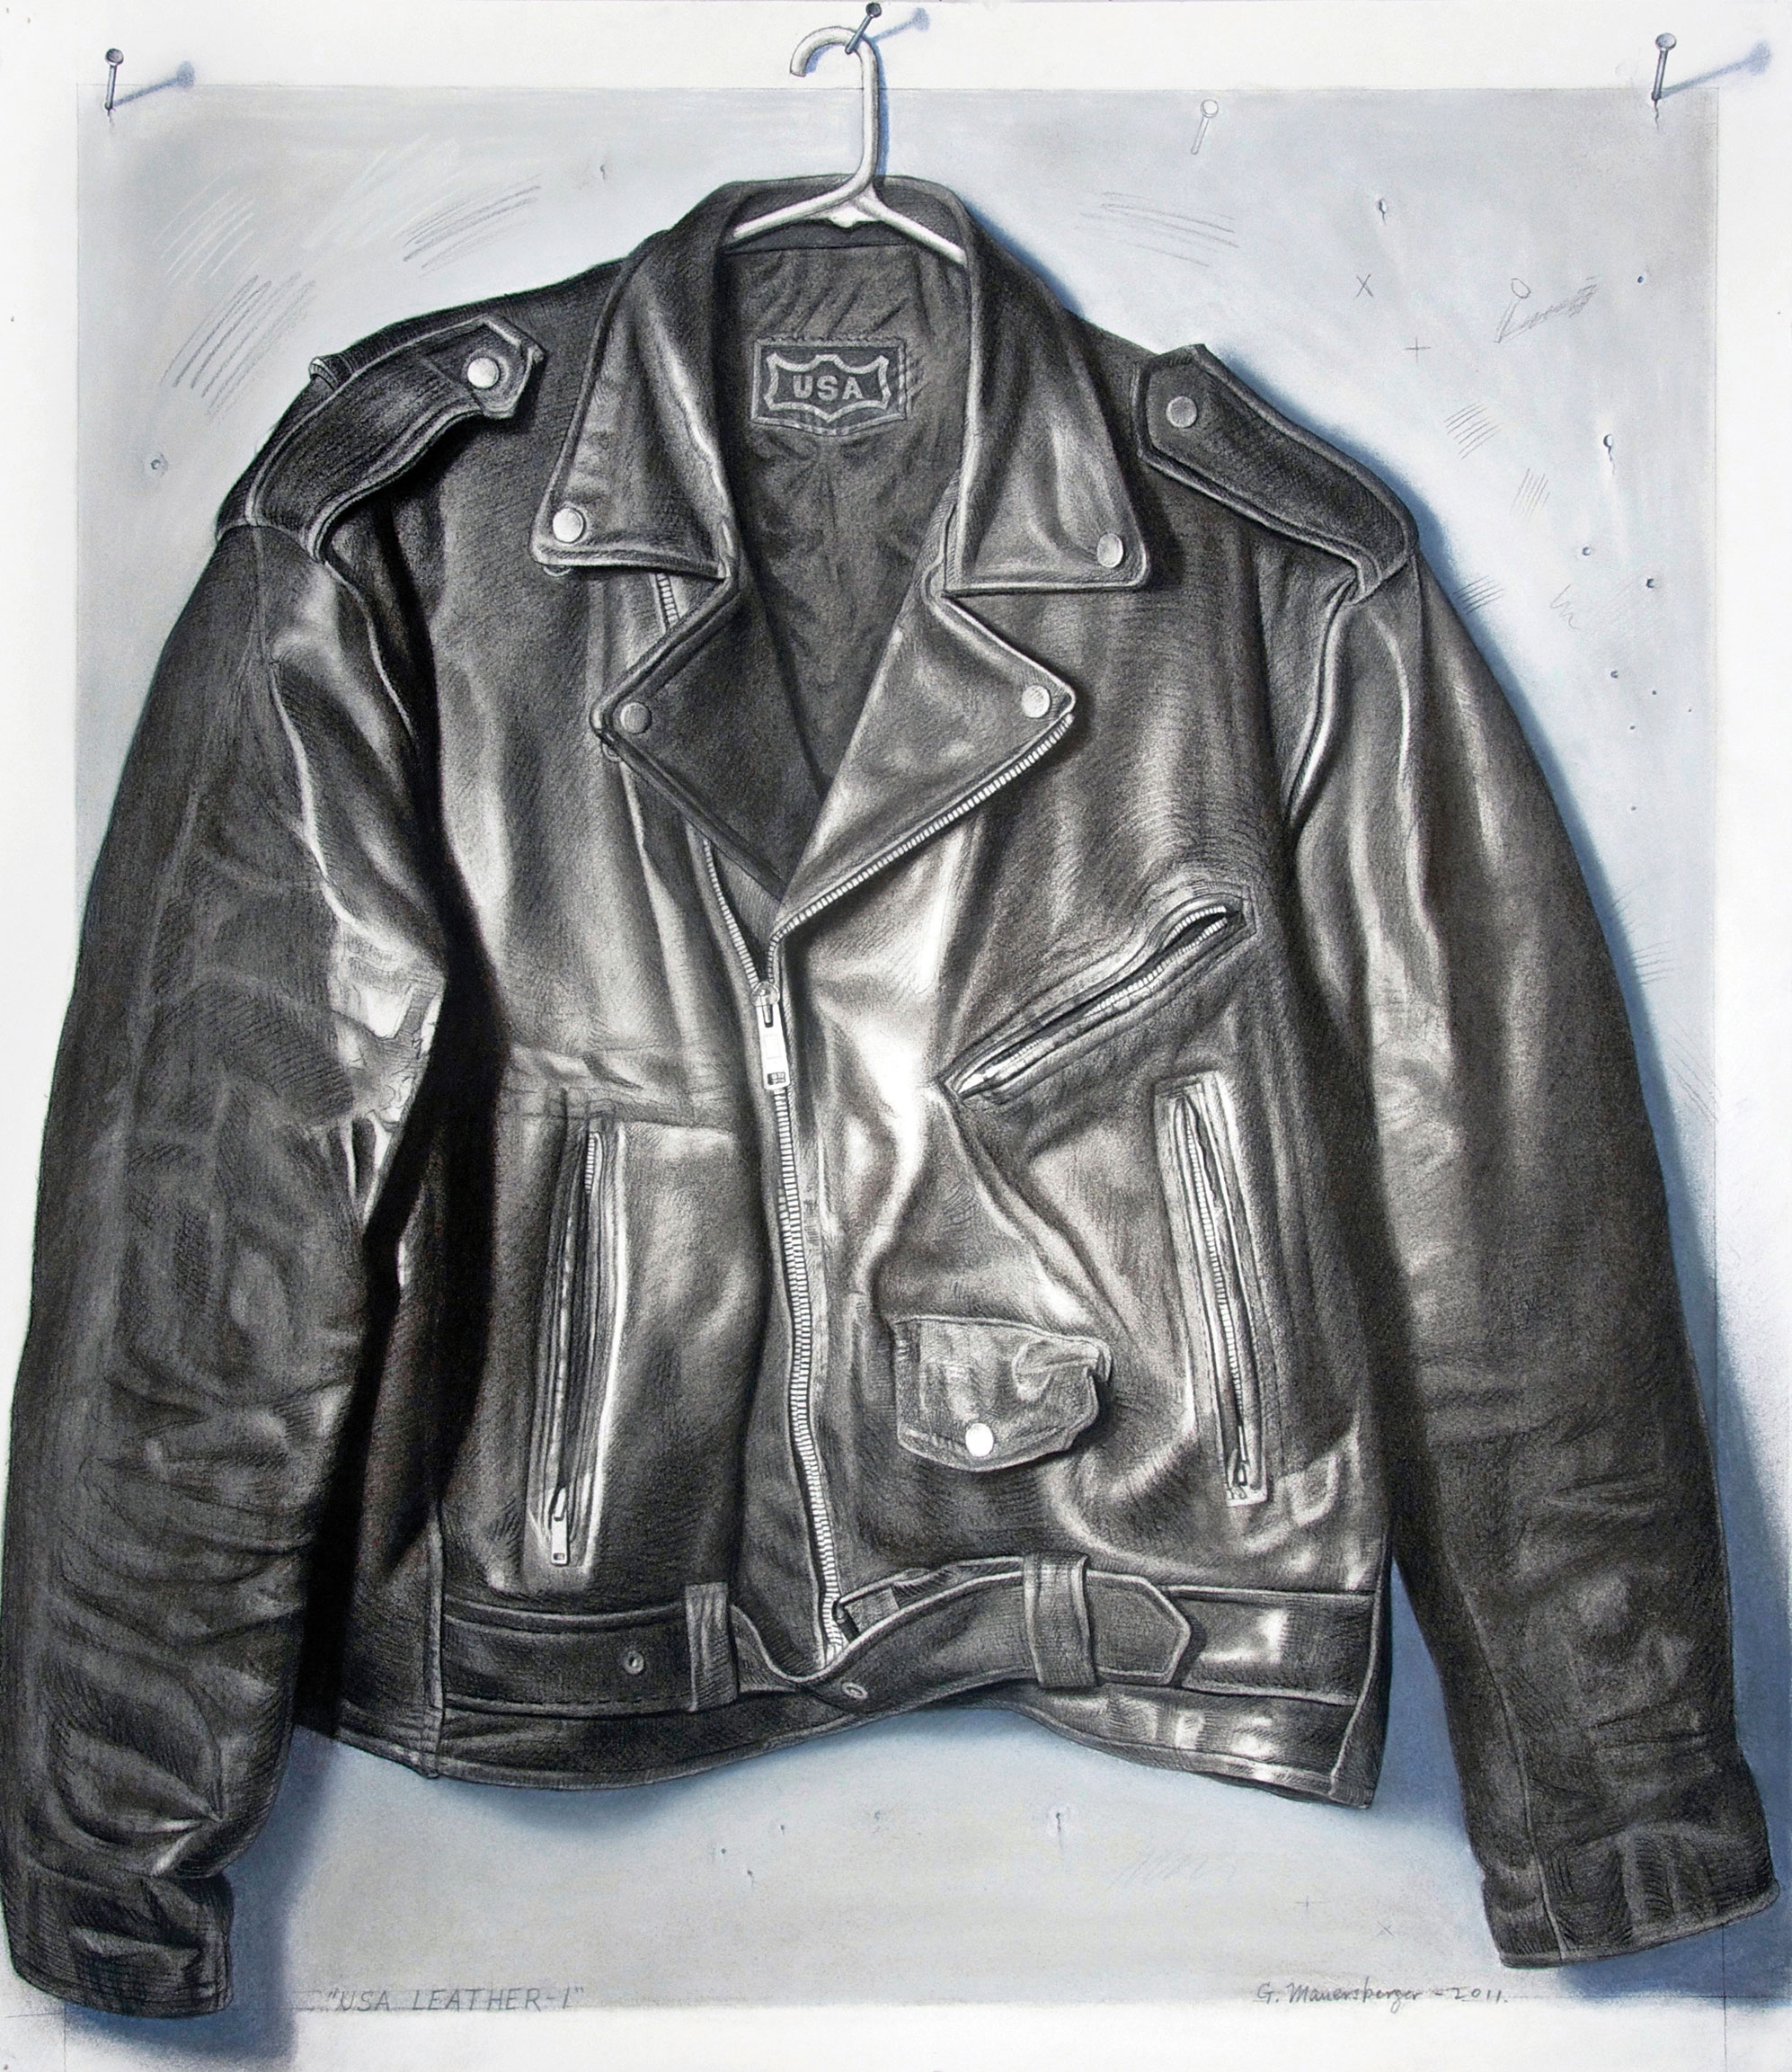 USA Leather 1